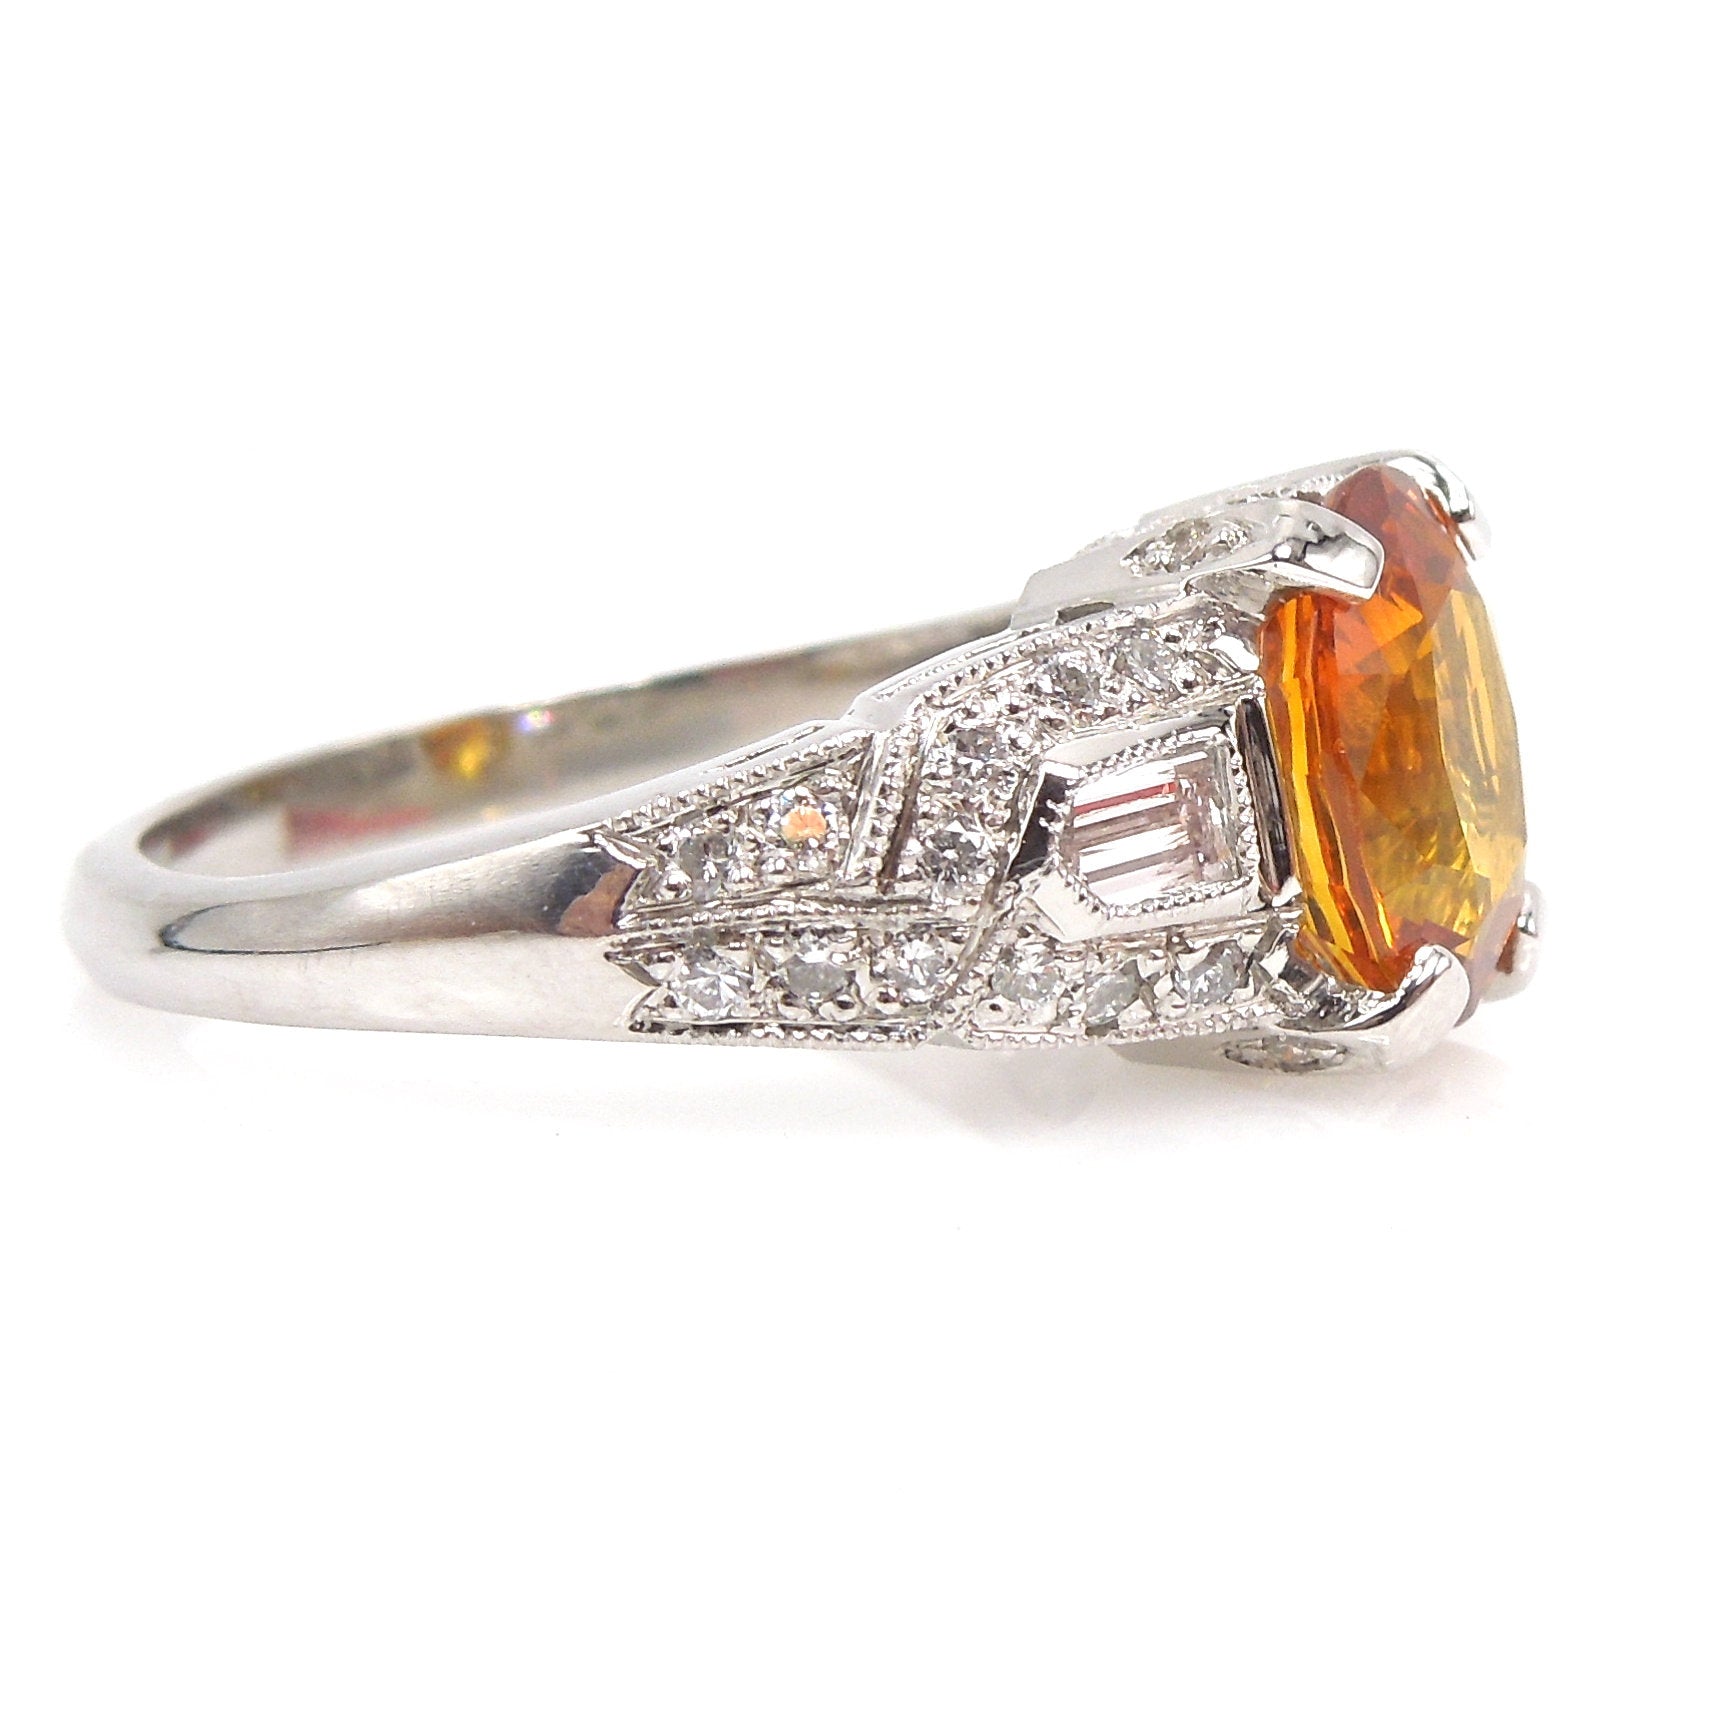 2.03 Carat Oval Cut Orange Sapphire in Art Deco Style Ring in Platinum